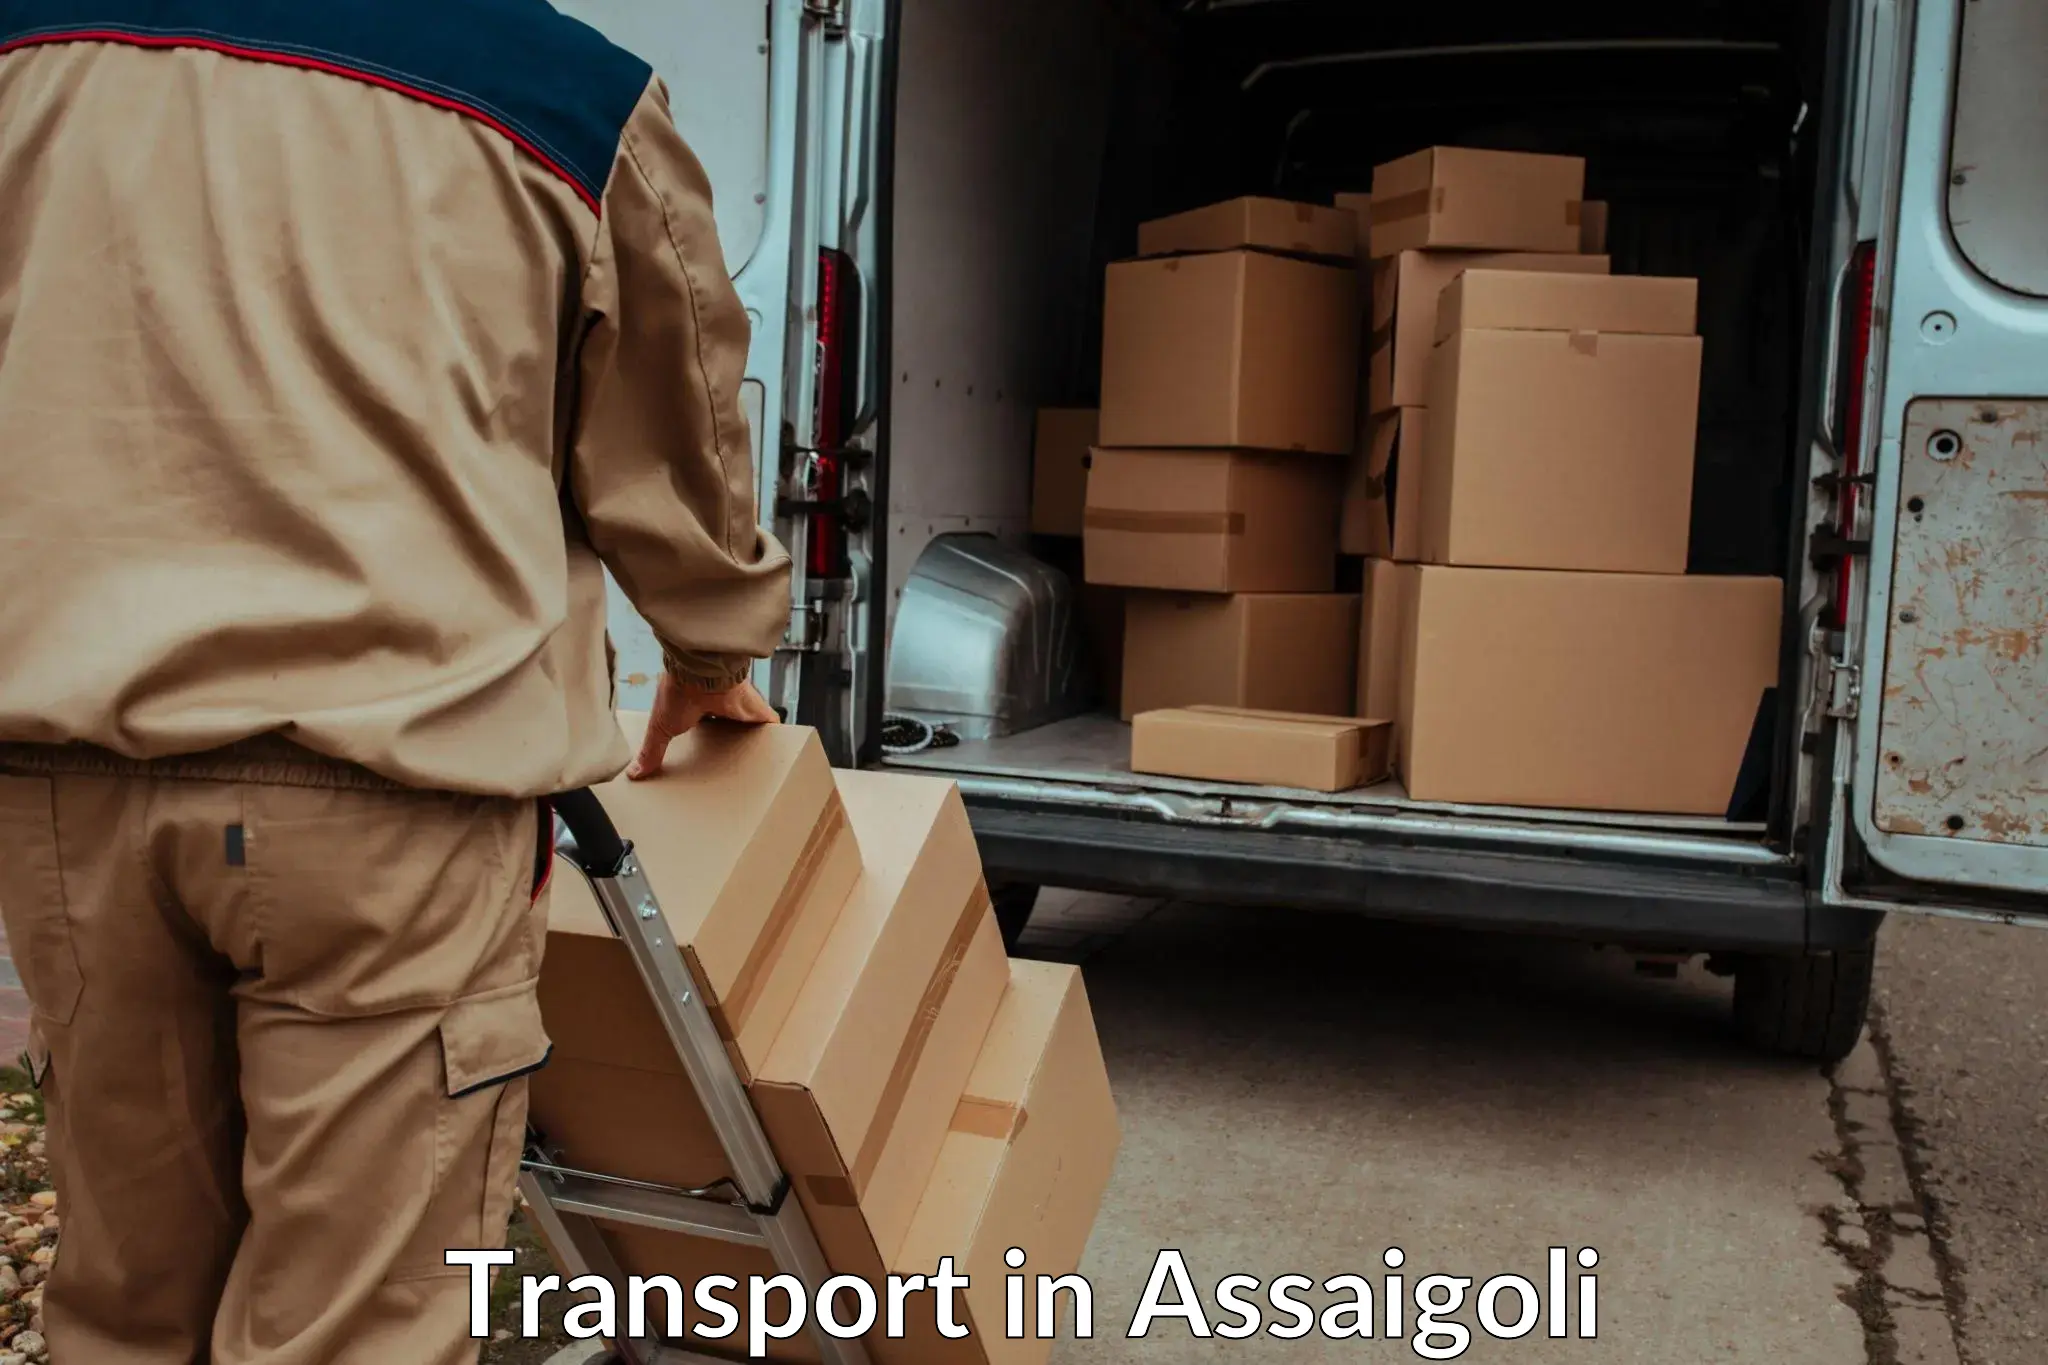 Online transport in Assaigoli